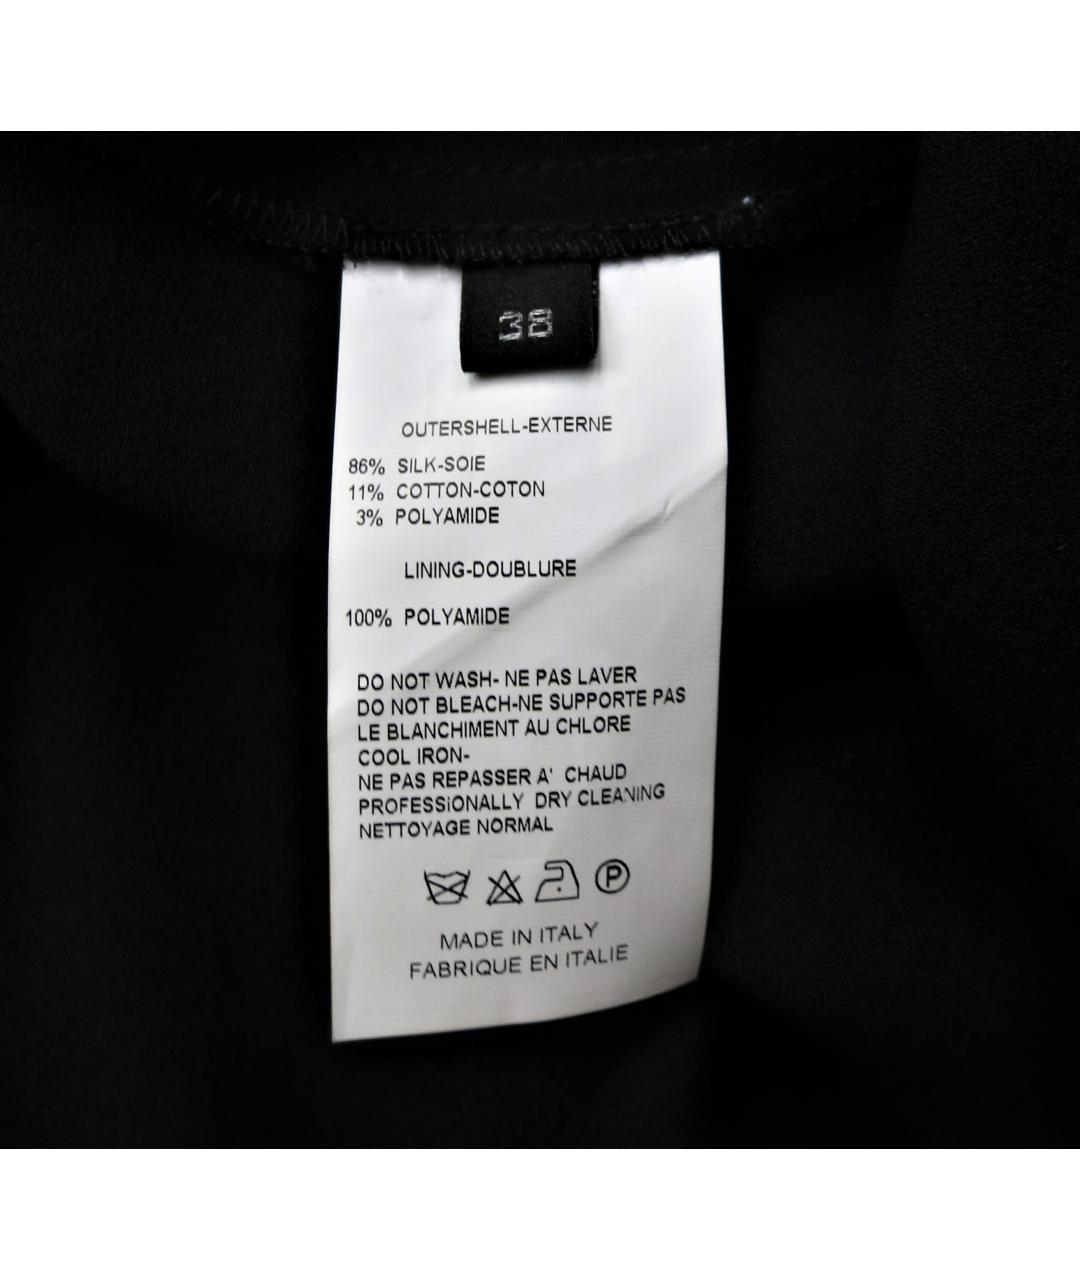 ELIE SAAB Черная шелковая блузы, фото 6